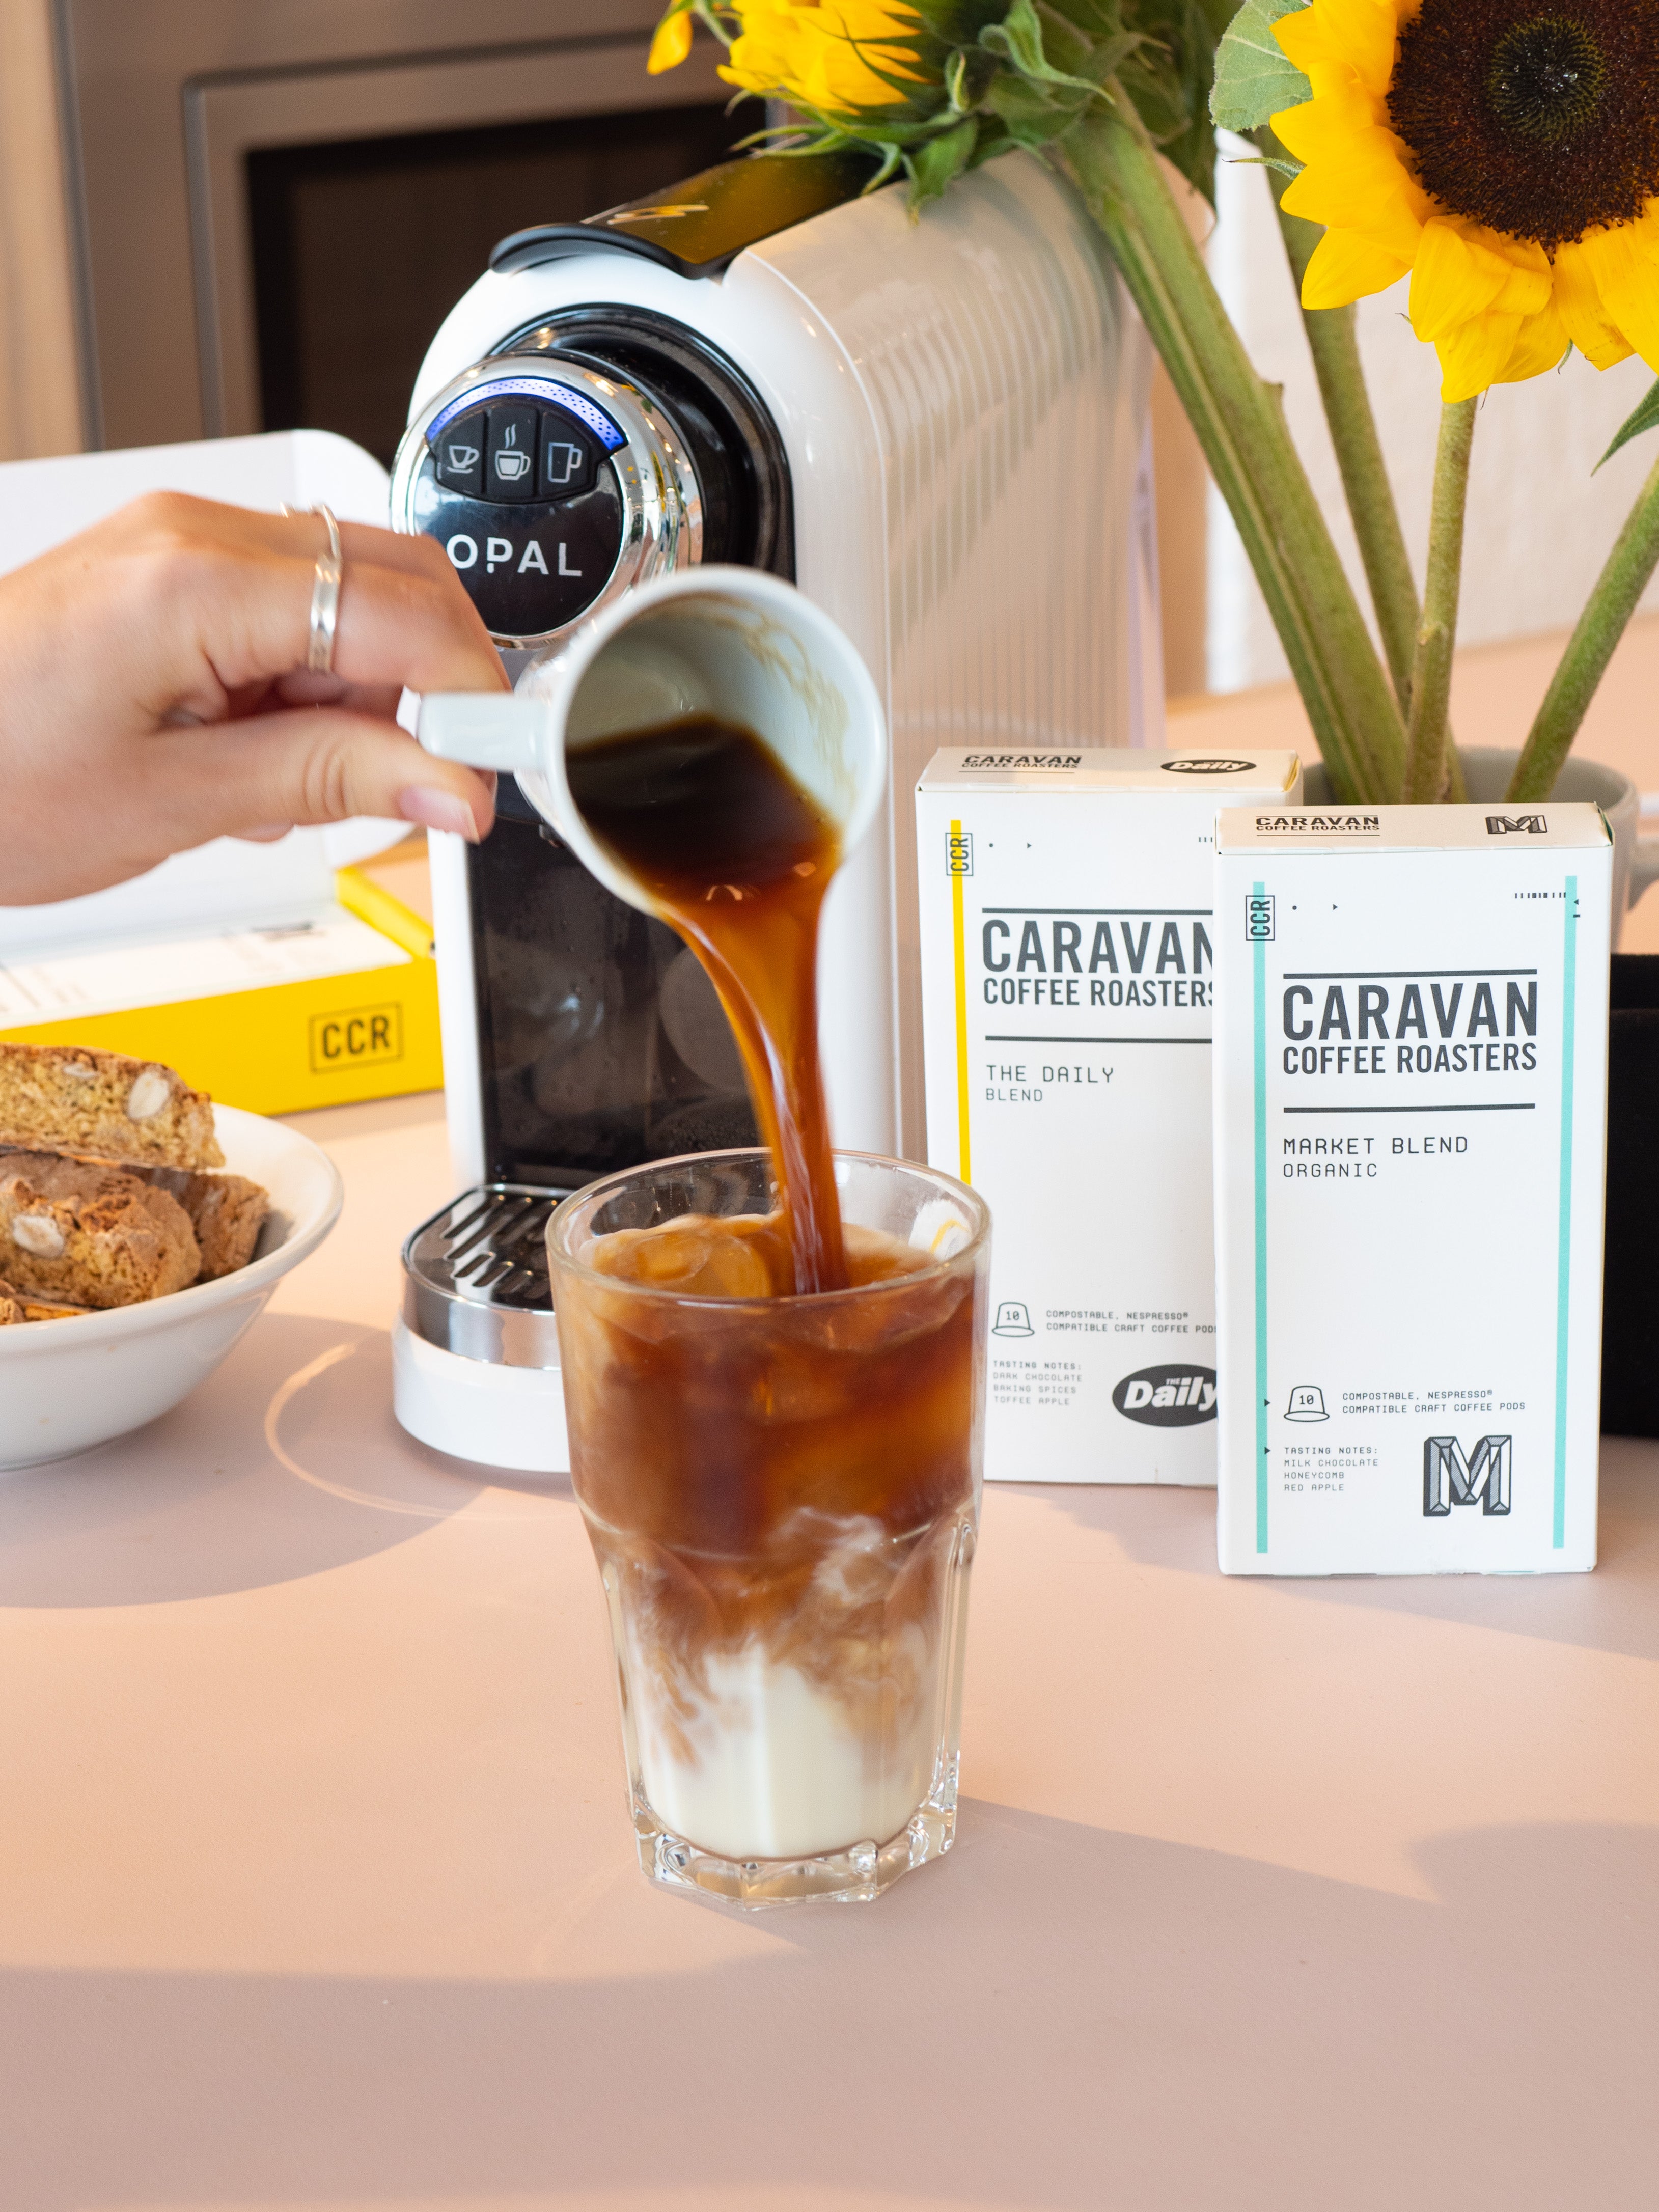 Caravan Coffee Roasters - Decaf Pods (10 x 10 Pods) // Stores Supply // Caravan